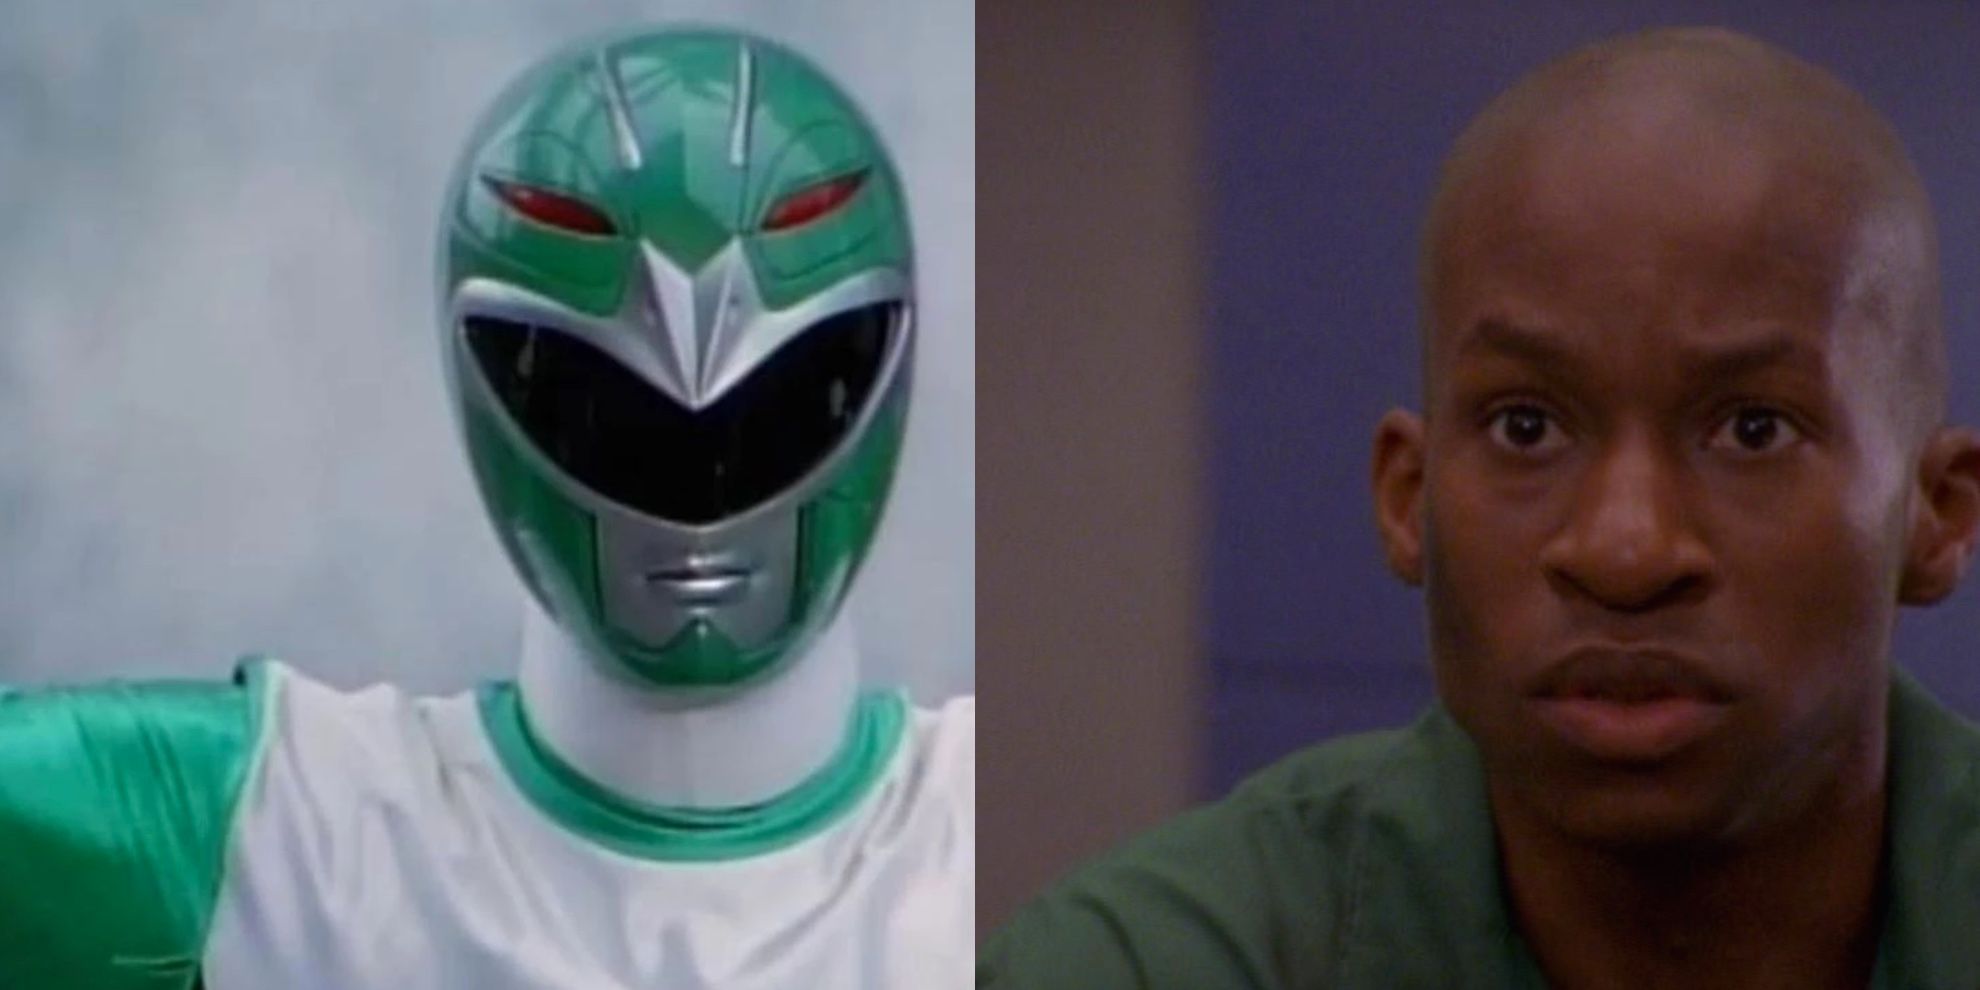 Damon as the Green Ranger in Power Rangers Lost Galaxy